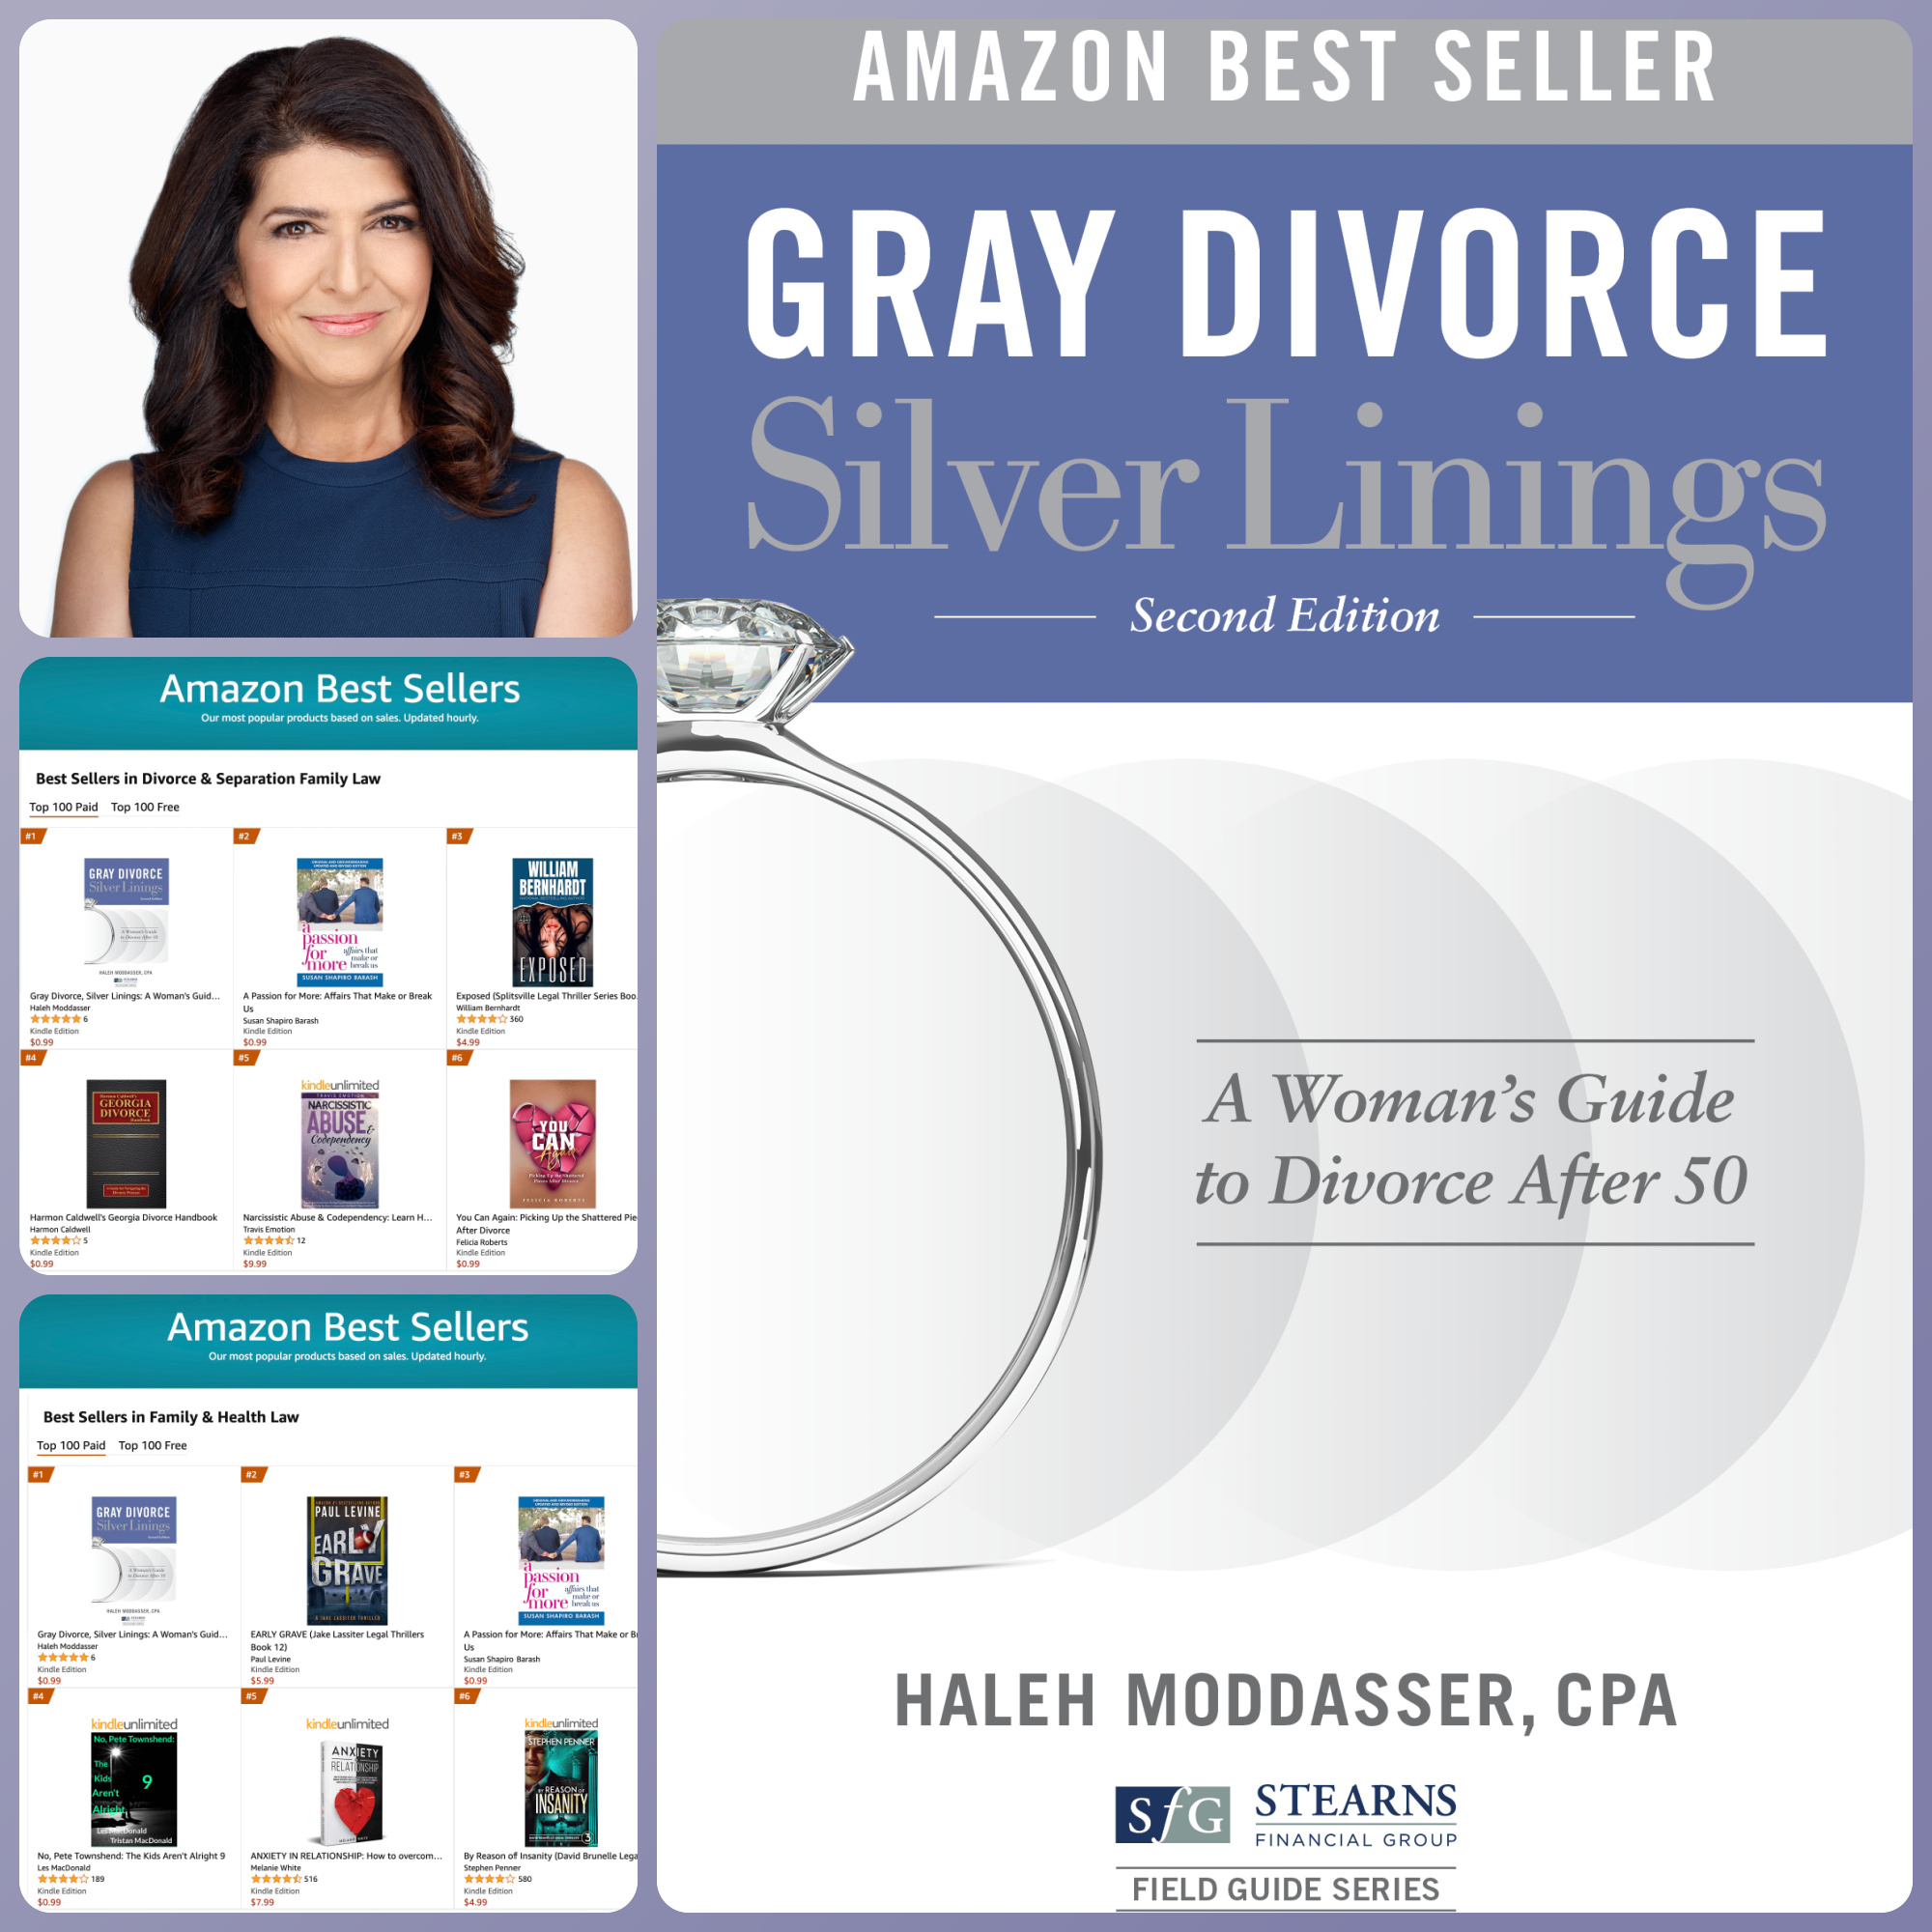 Gray Divorce bestseller